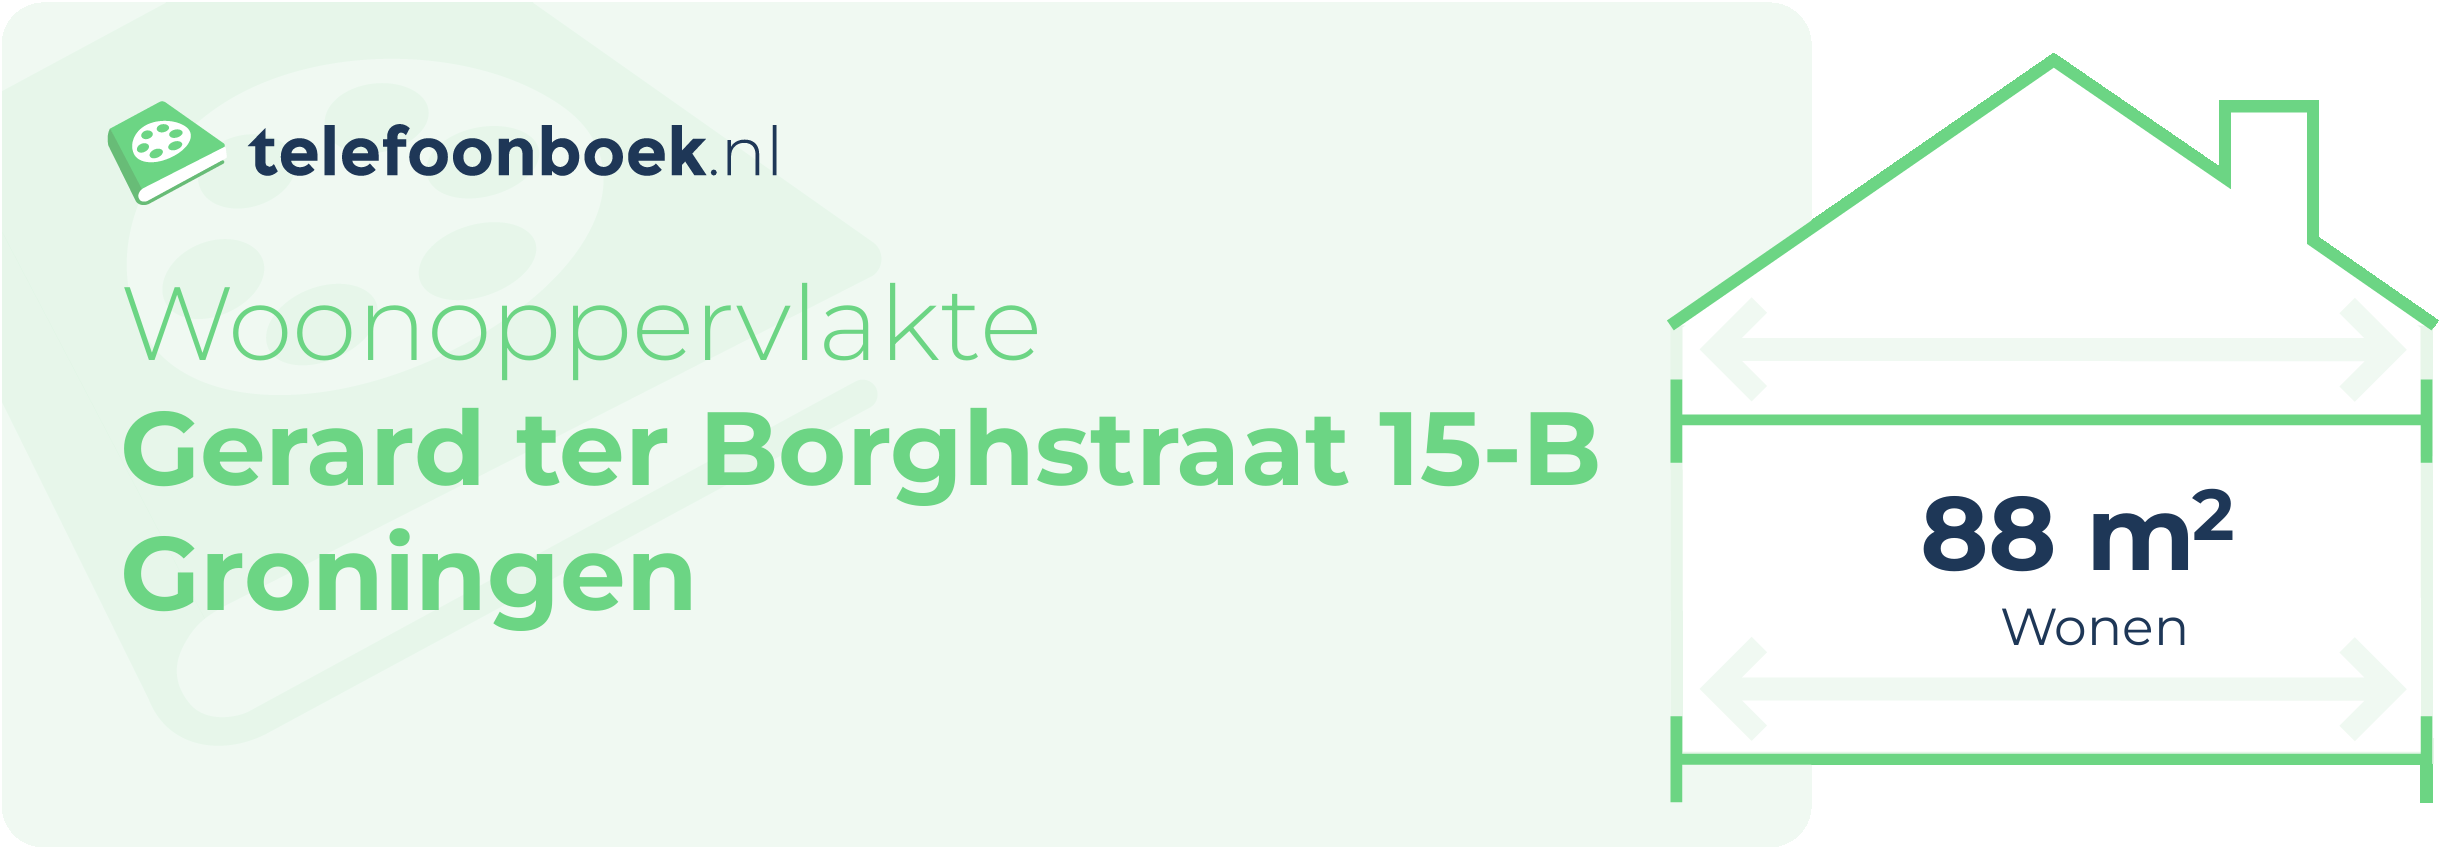 Woonoppervlakte Gerard Ter Borghstraat 15-B Groningen